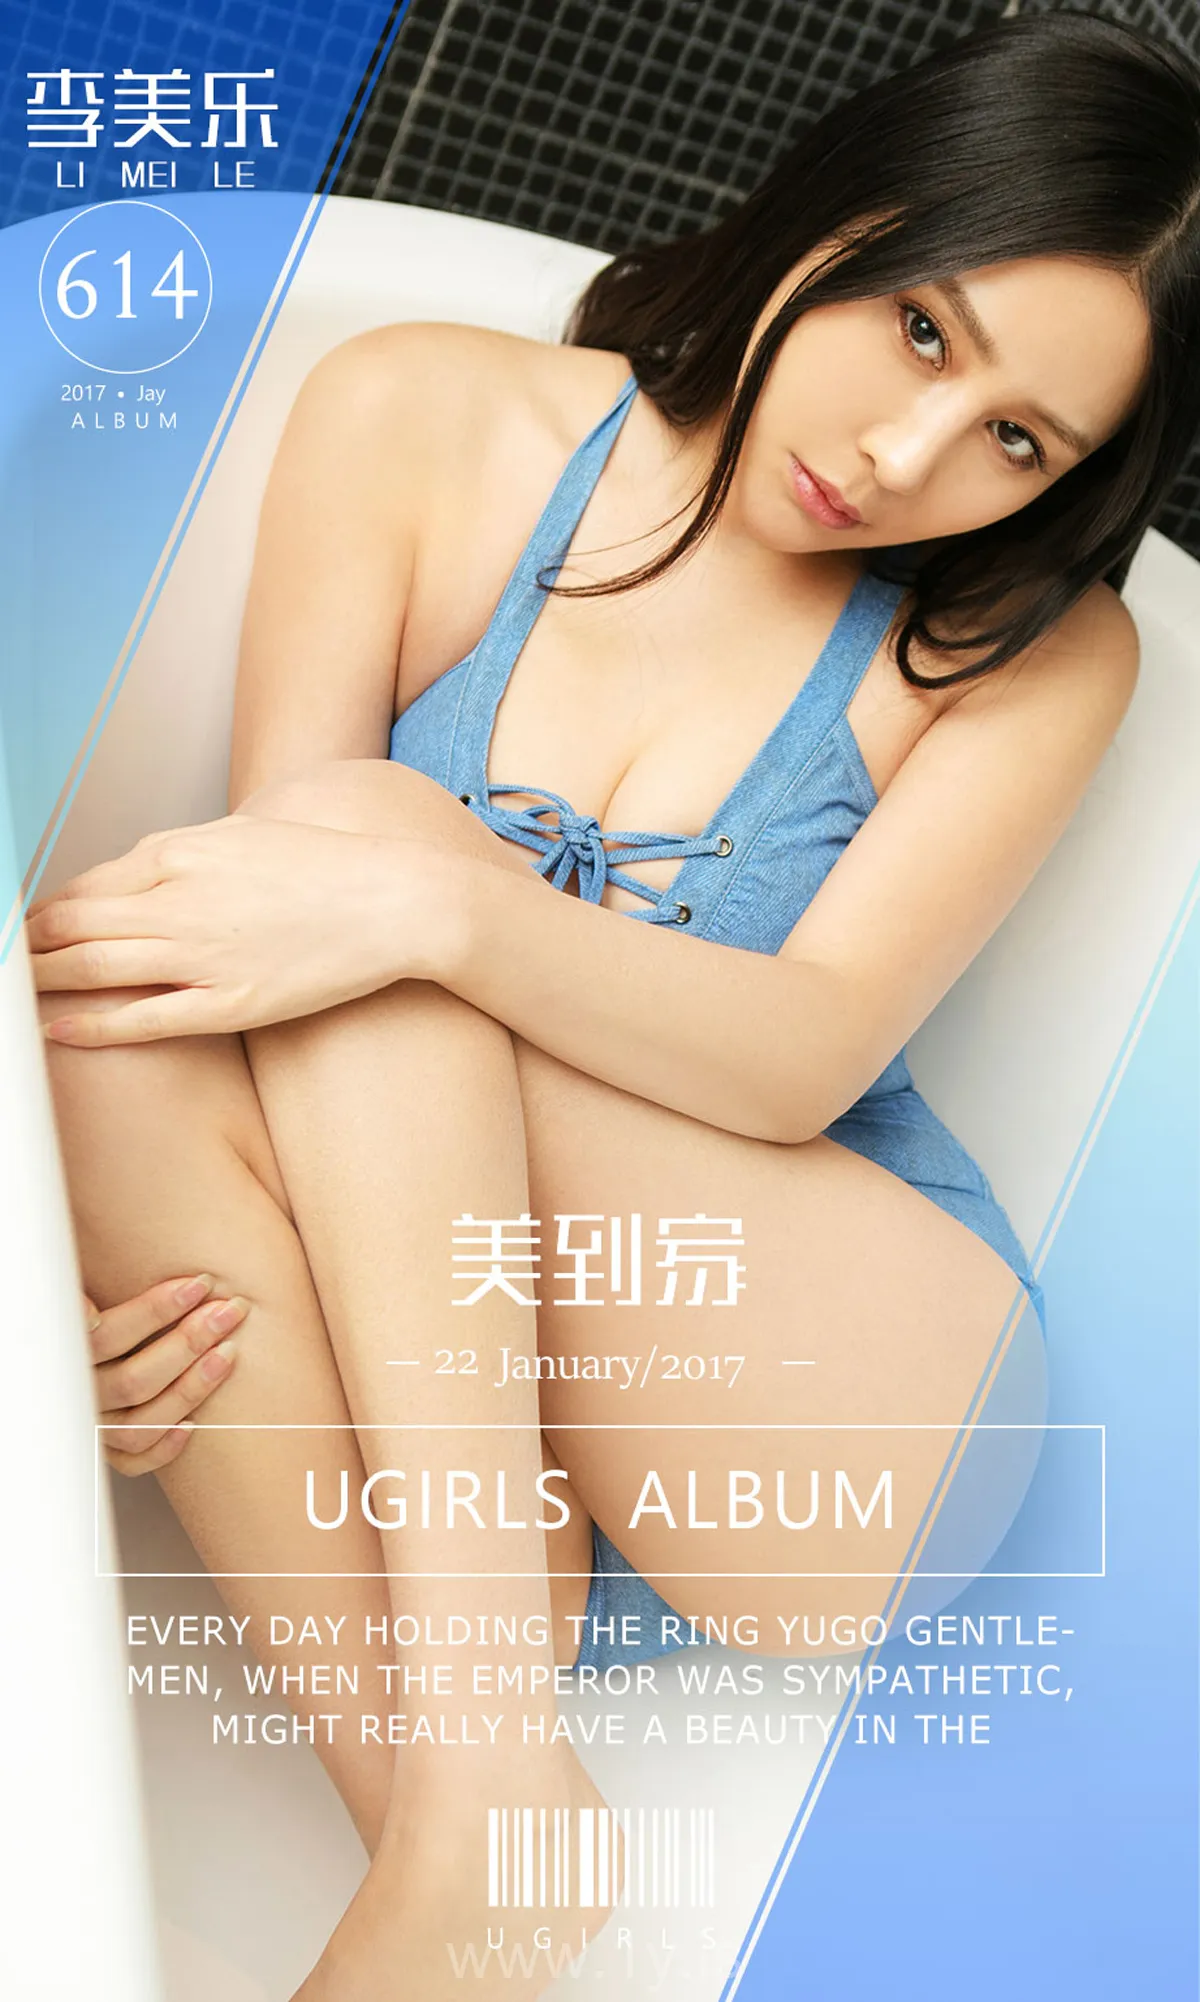 UGIRLS NO.614 Attractive Chinese Jade 李美乐